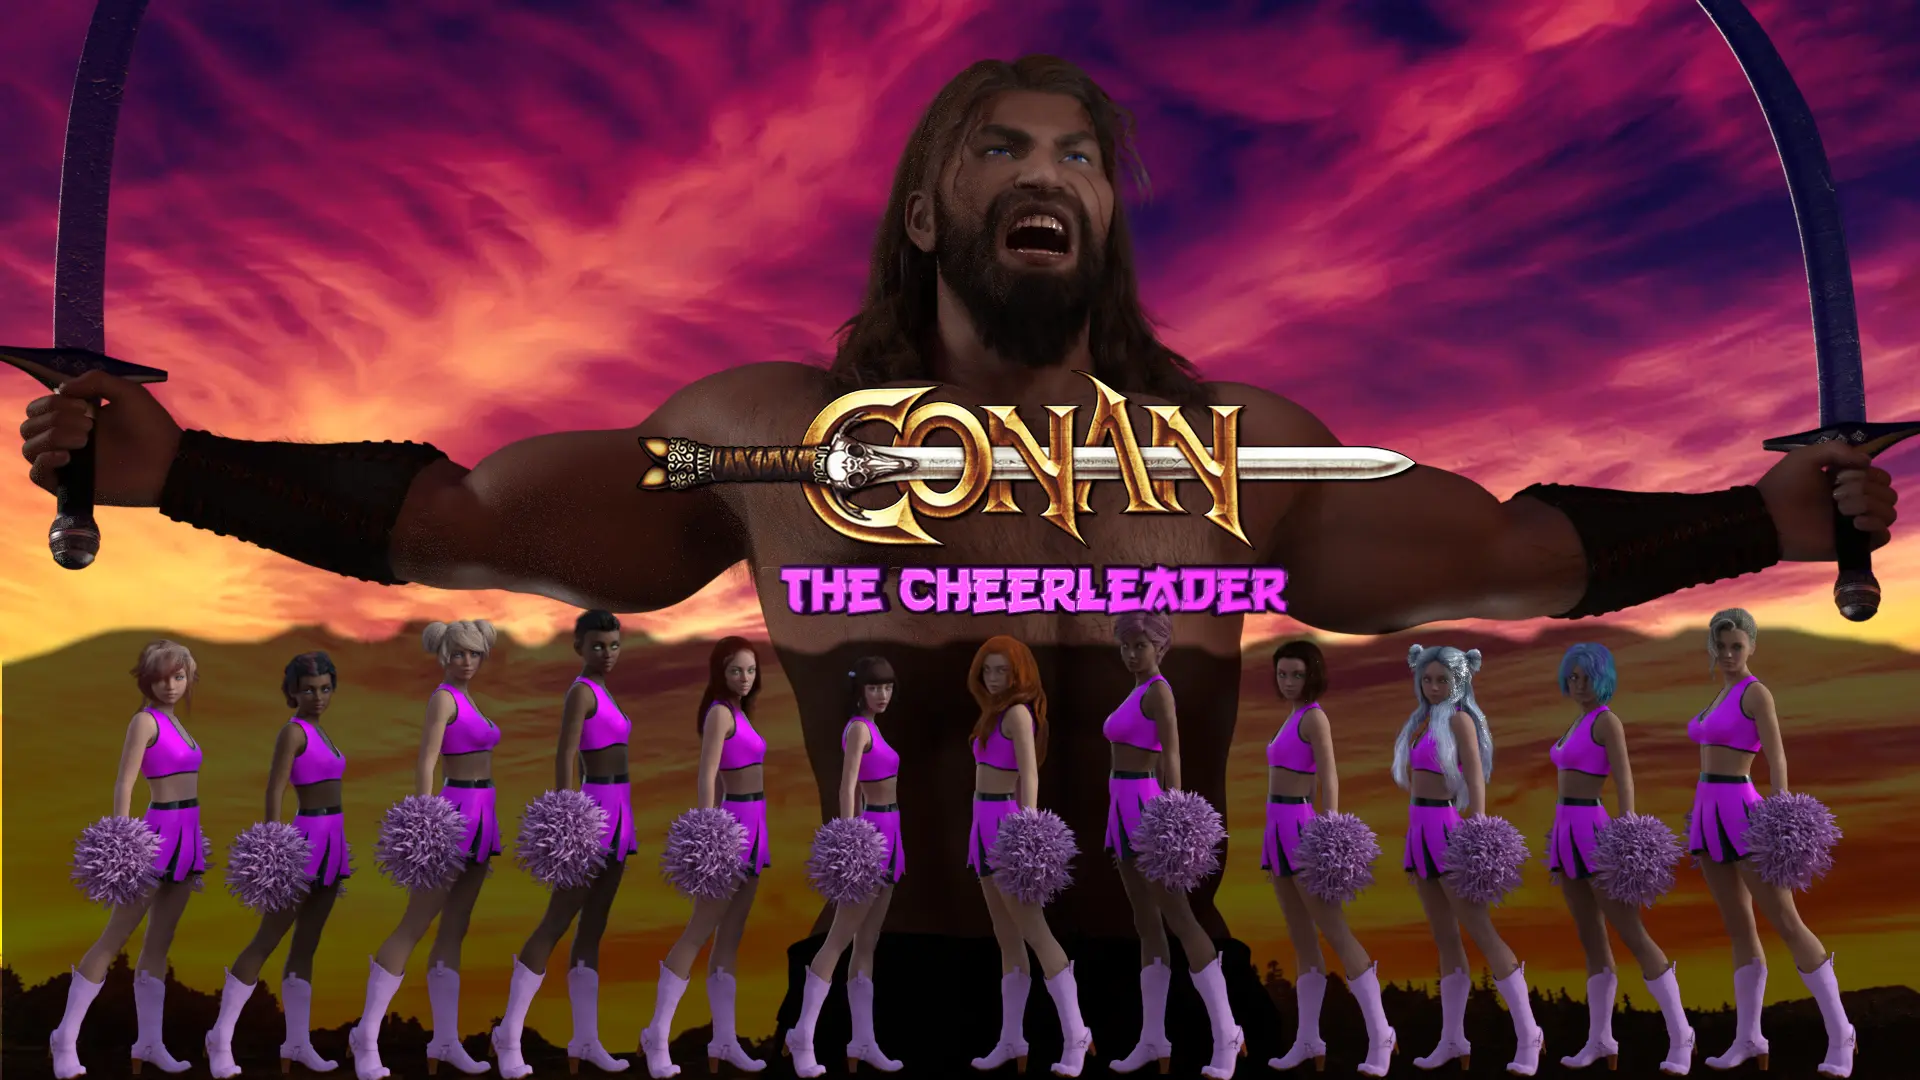 Conan the Cheerleader main image